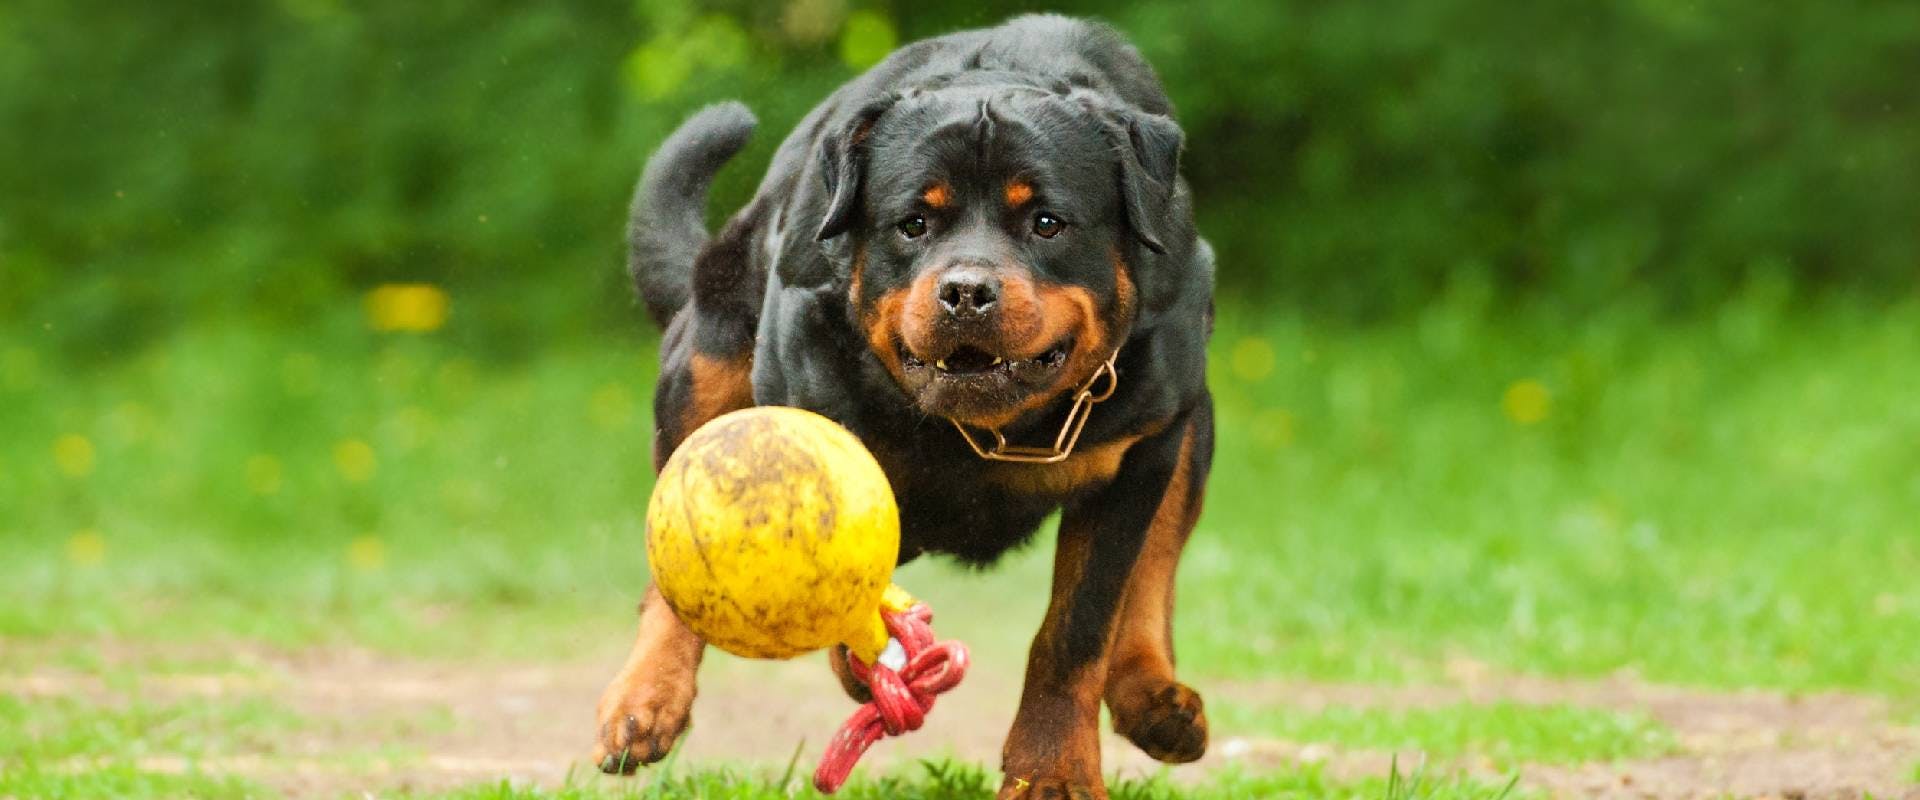 Rottweiler dog chasing a ball